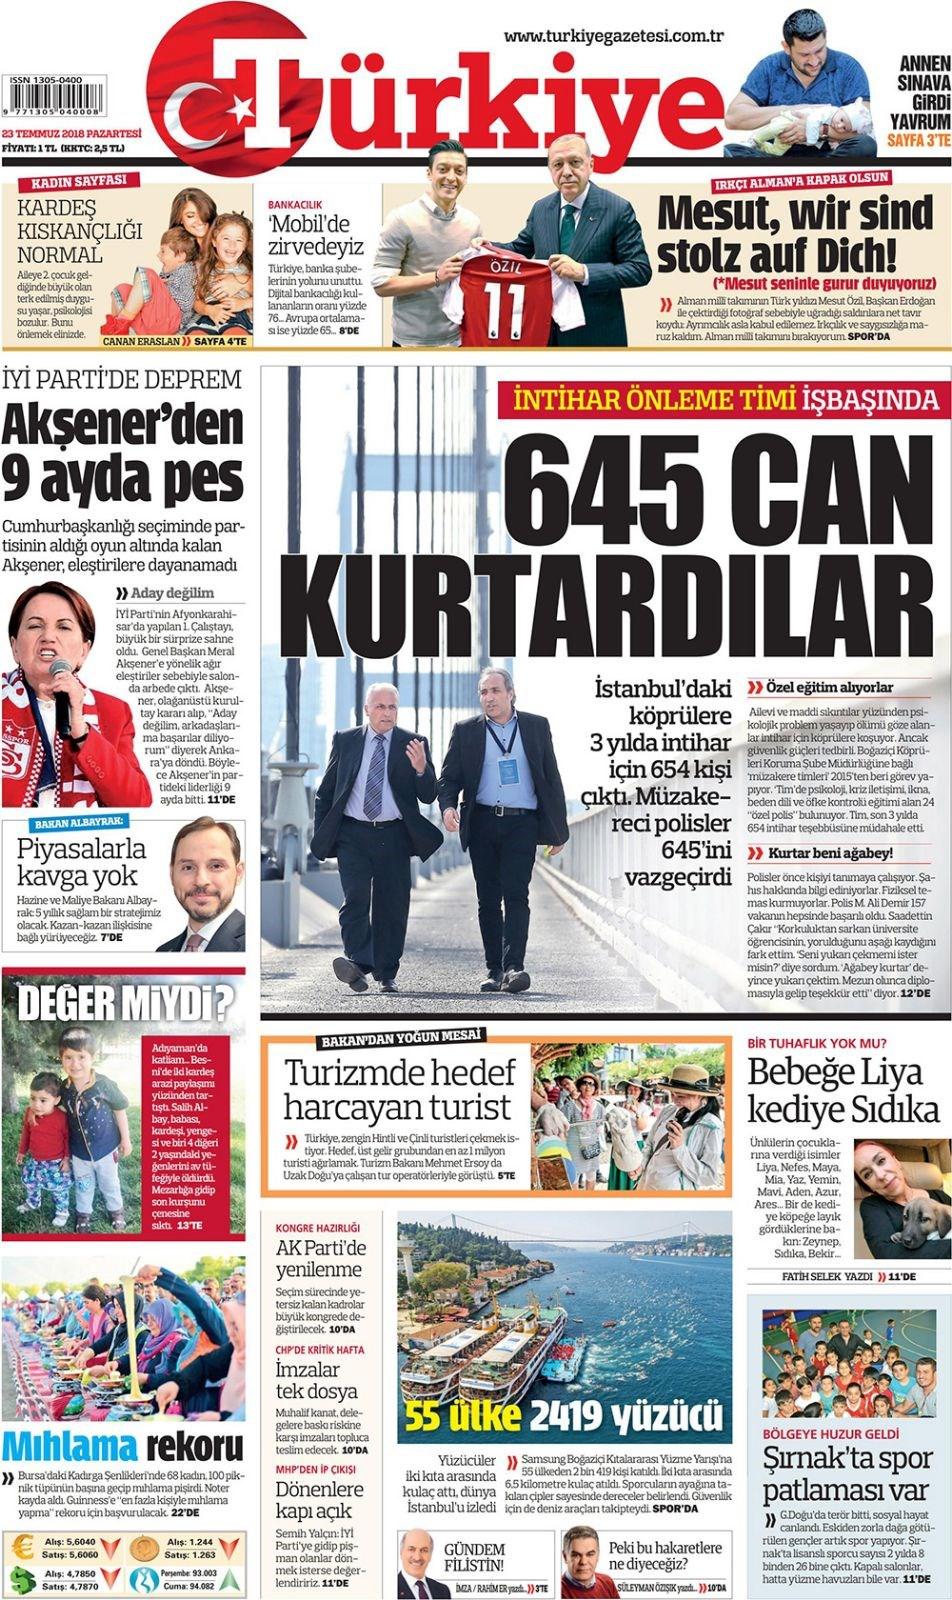 Gazete manşetleri 23 Temmuz 2018 Hürriyet - Posta - Sabah